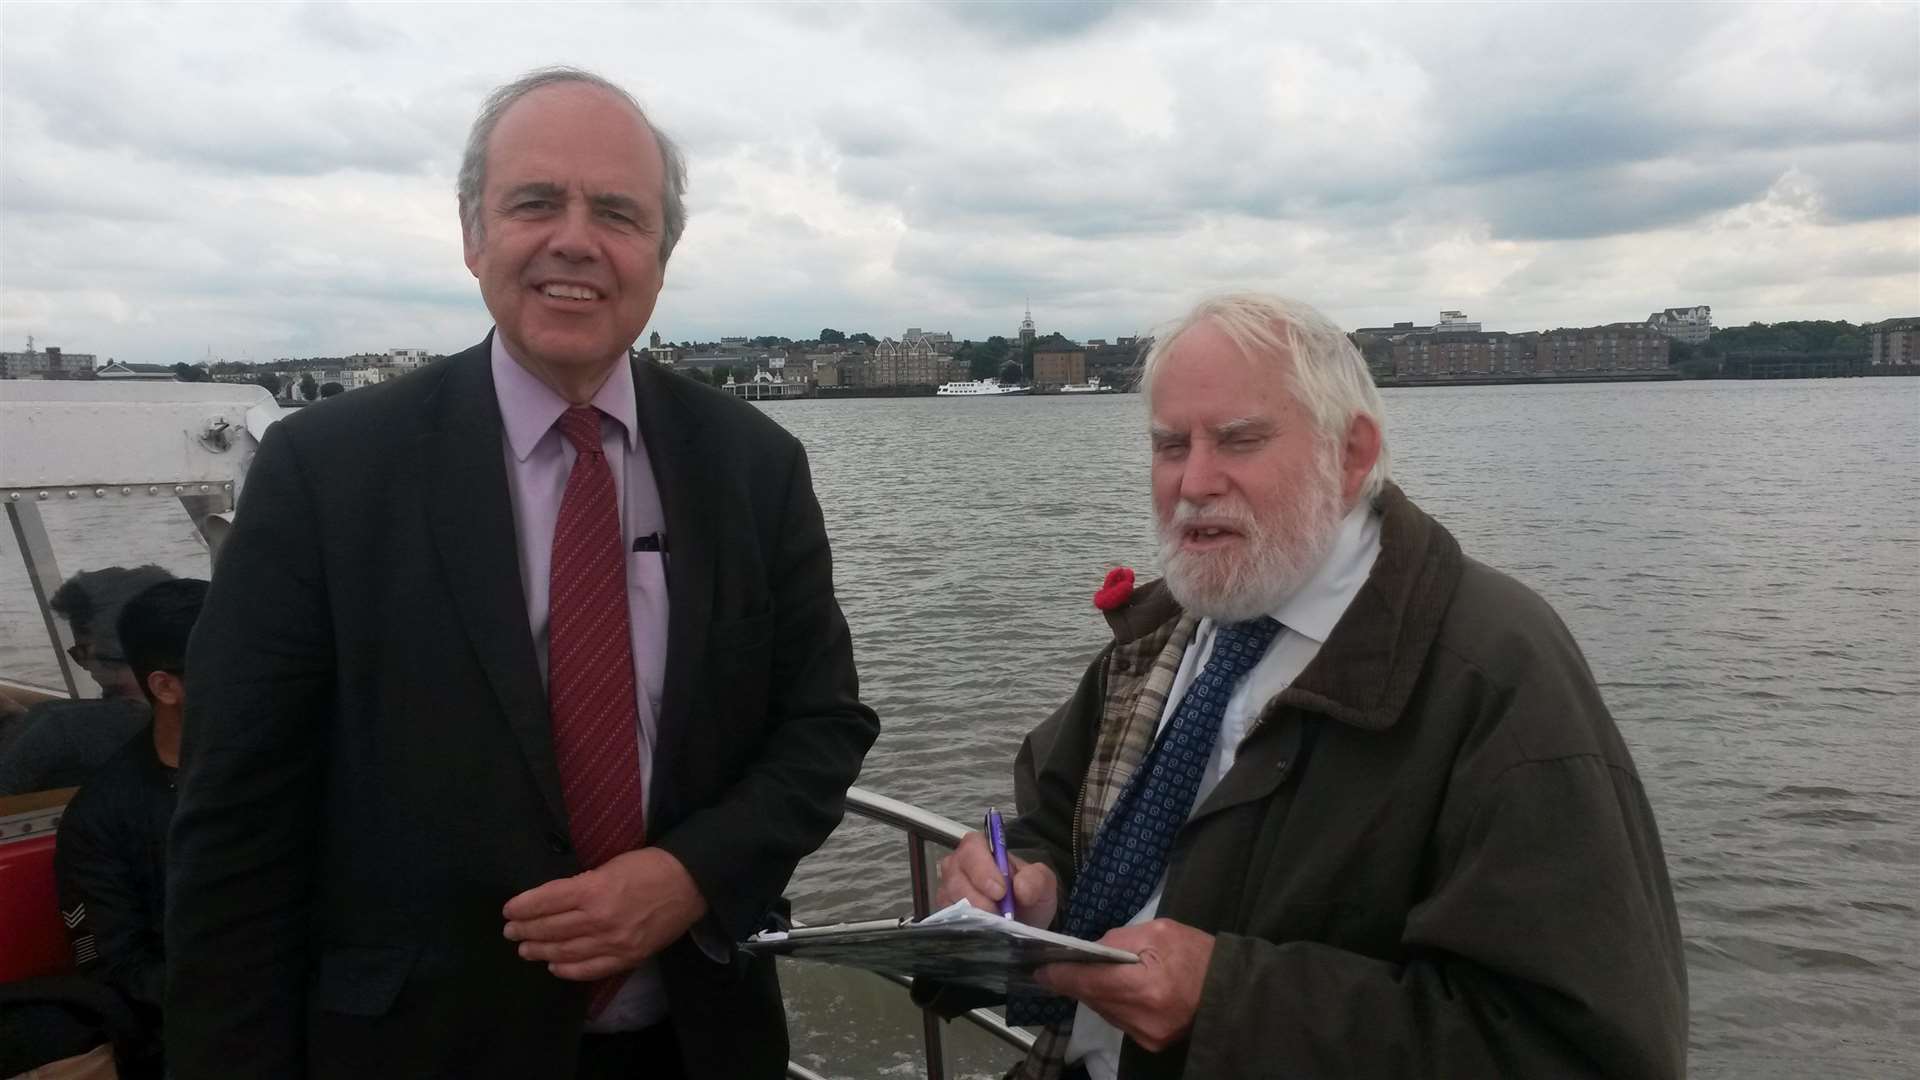 KenEx Thames Transit designer Gordon Pratt (left) with transport engineer Professor Lewis Lesley aboard the ferry from Tilbury to Gravesend